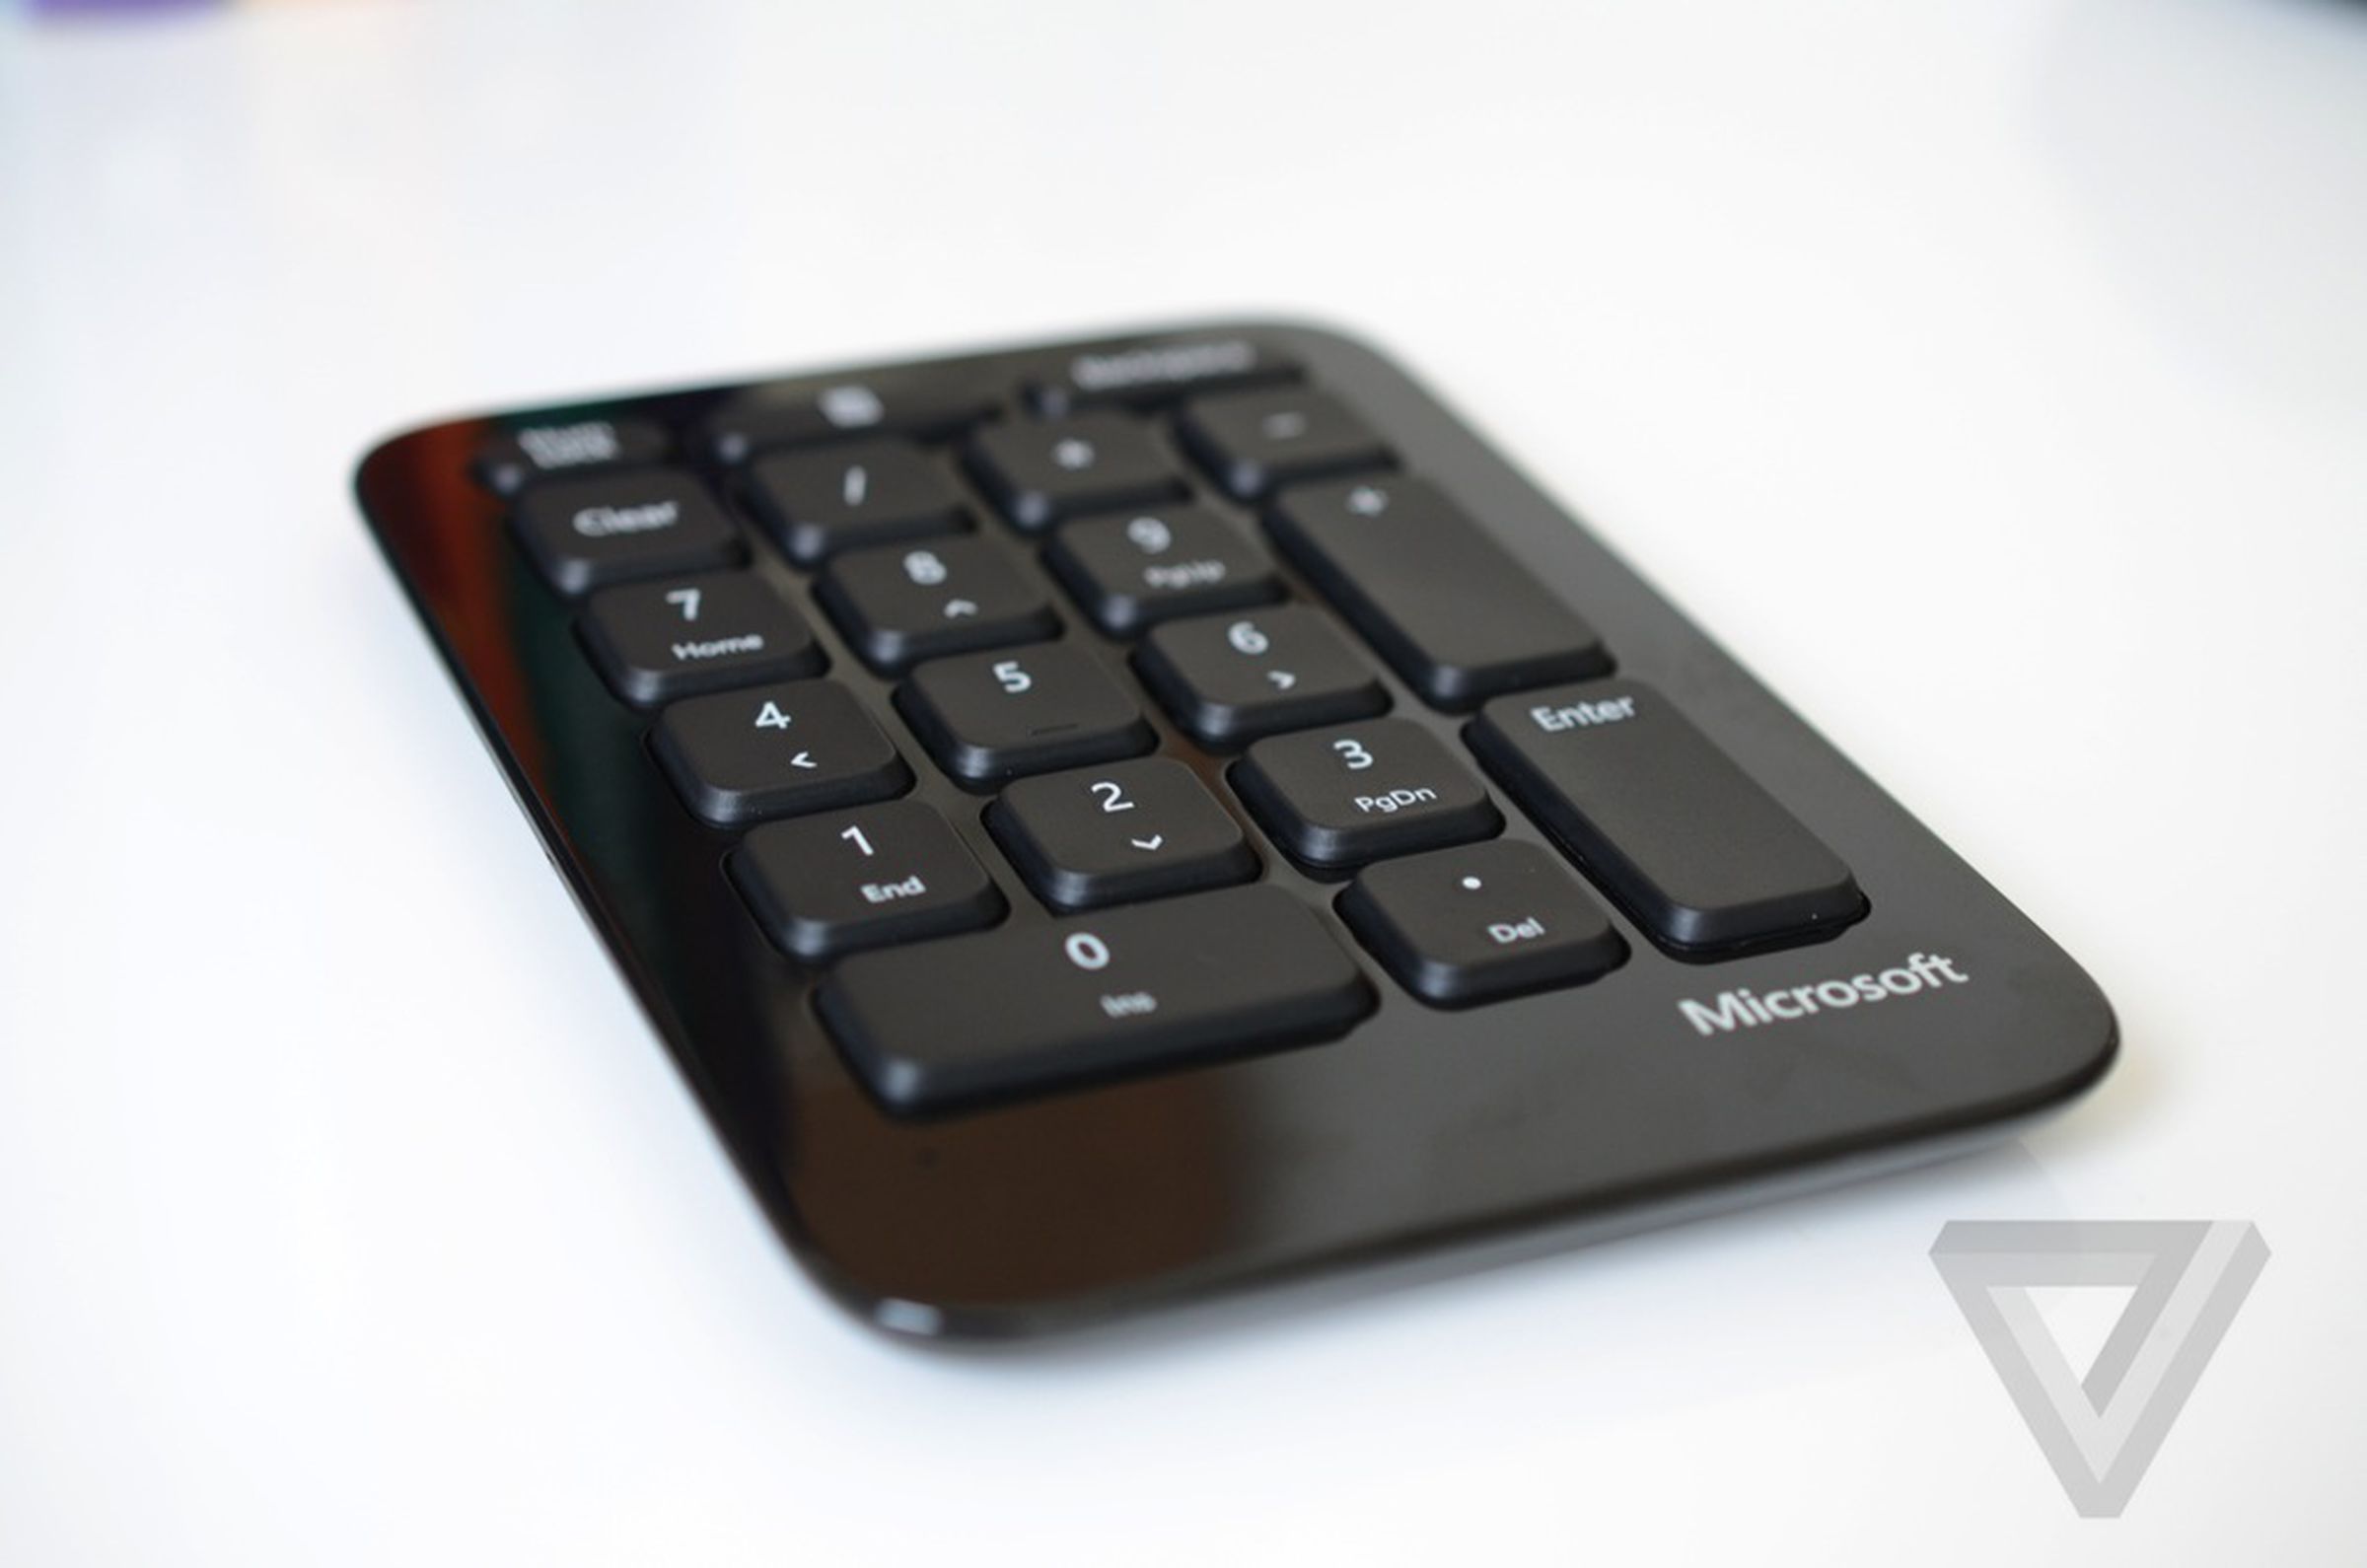 Microsoft Sculpt Ergonomic keyboard and mouse photos